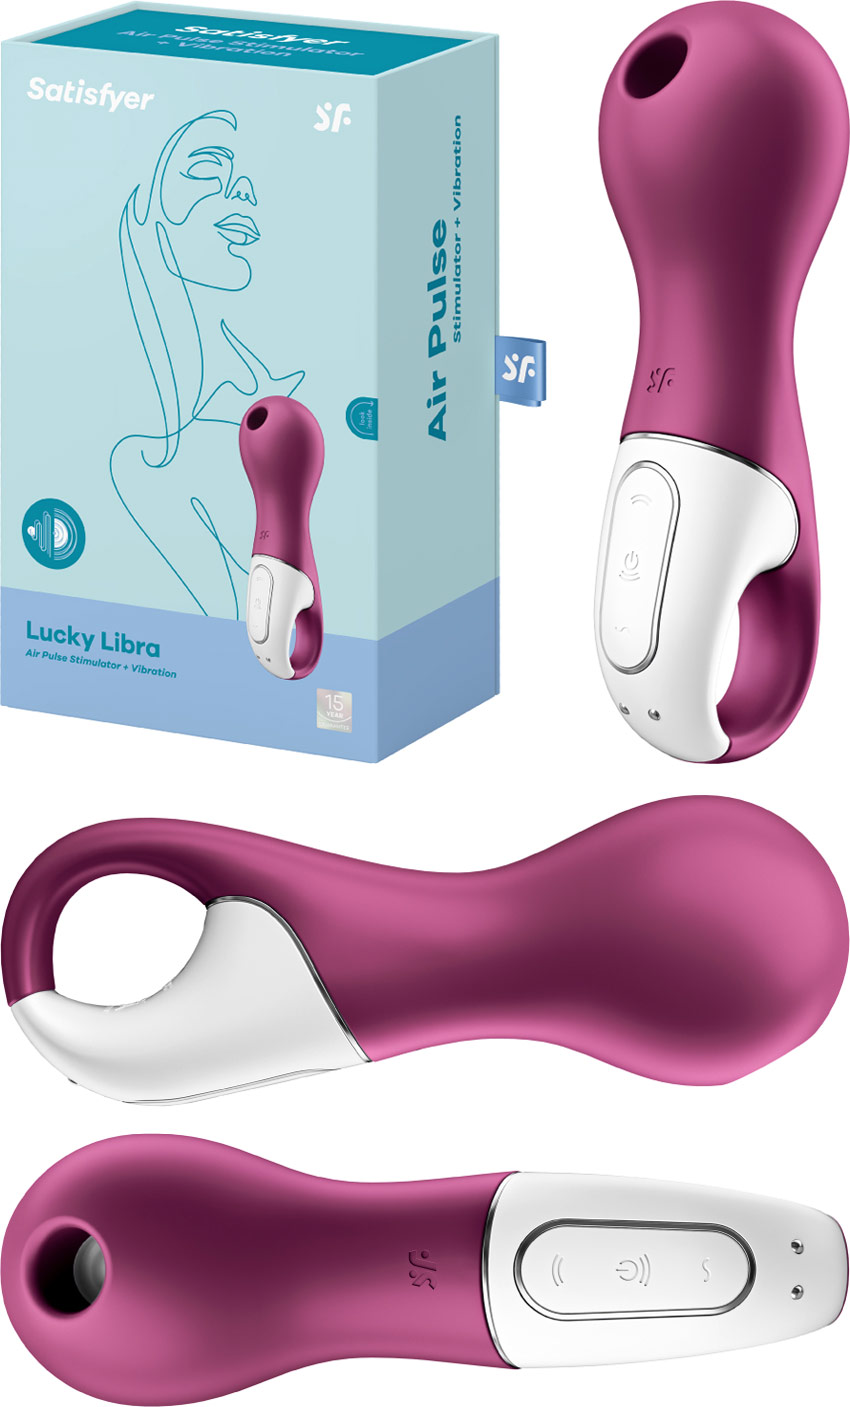 Satisfyer Lucky Libra - Vibrator and clitoral stimulator